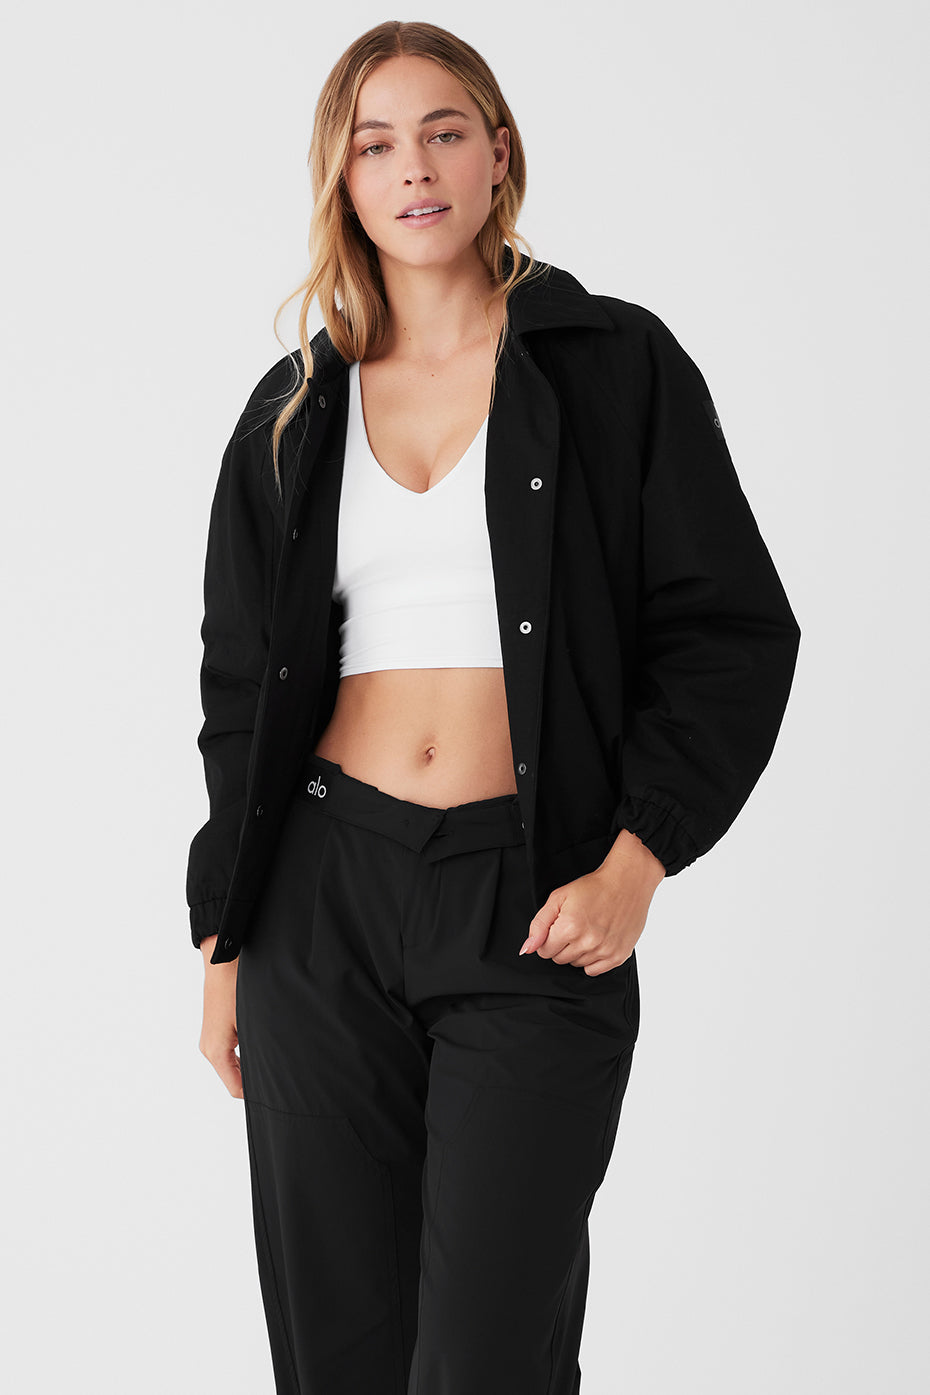 Buy Alo Yoga® Sherpa Varsity Jacket - Black At 20% Off